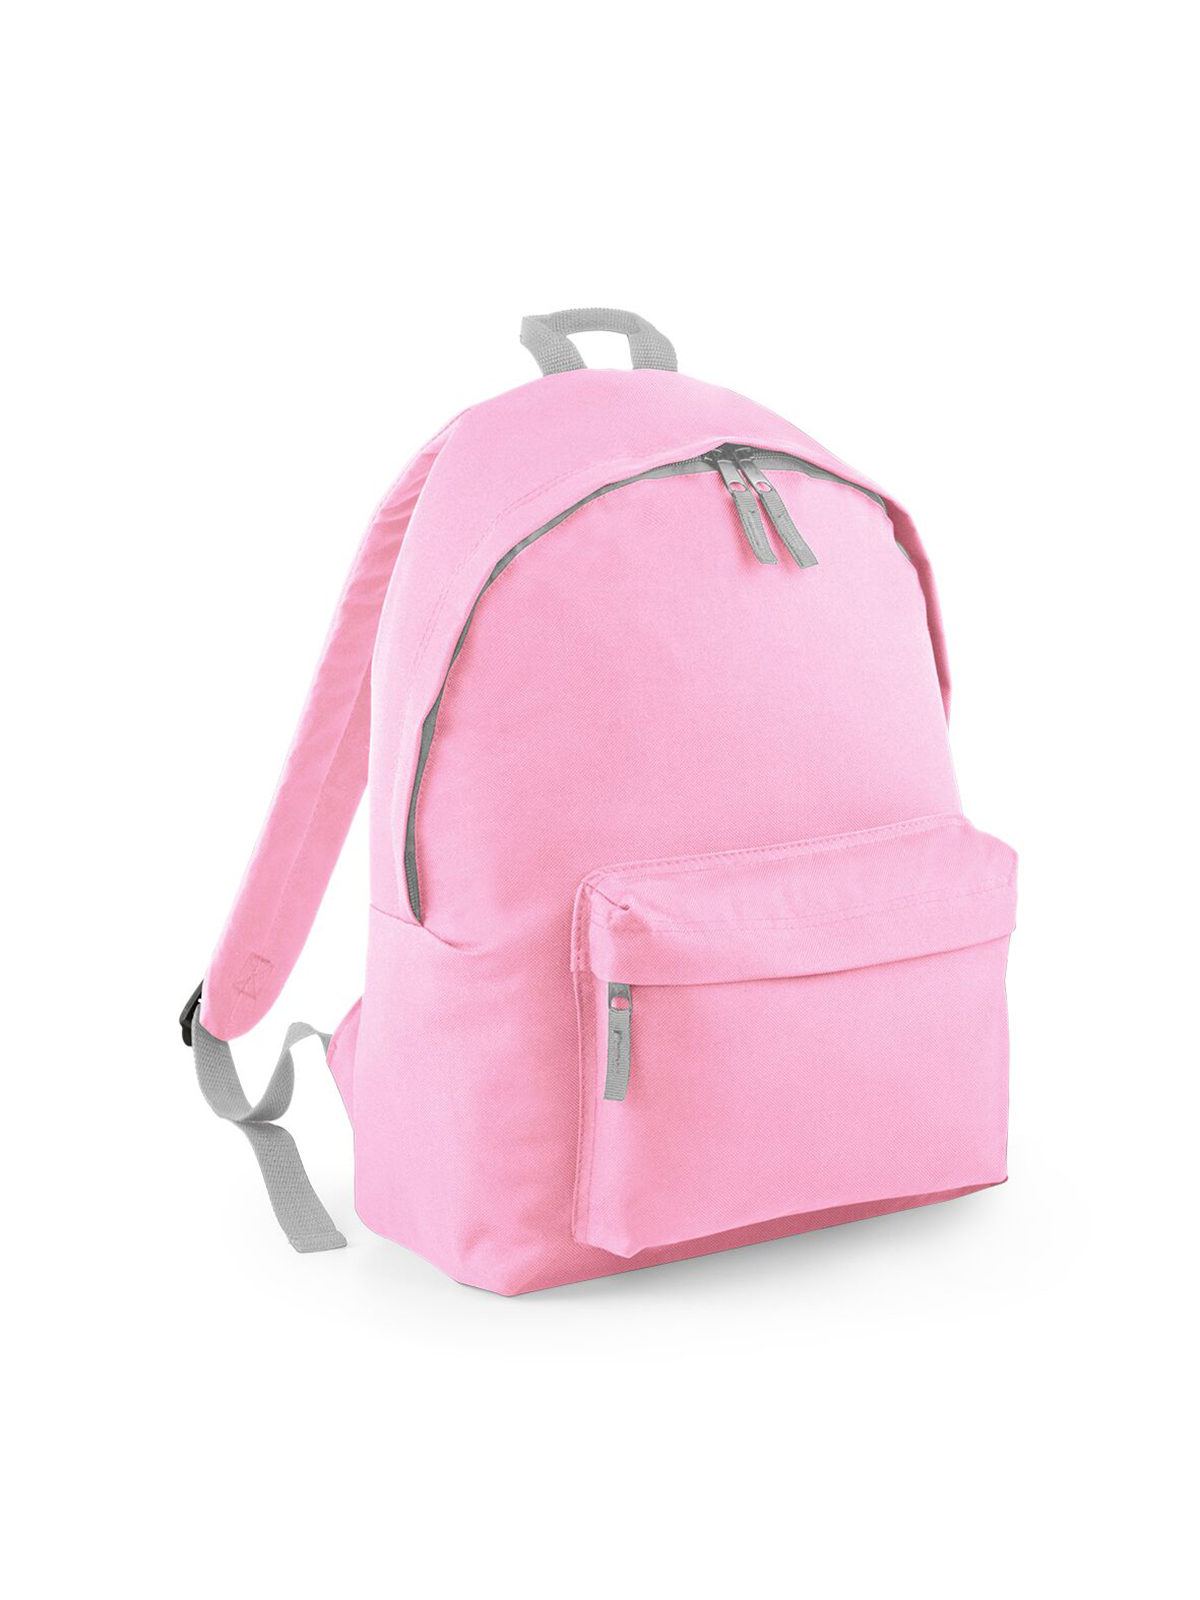 junior-fashion-backpack-classic-pink-light-grey.webp